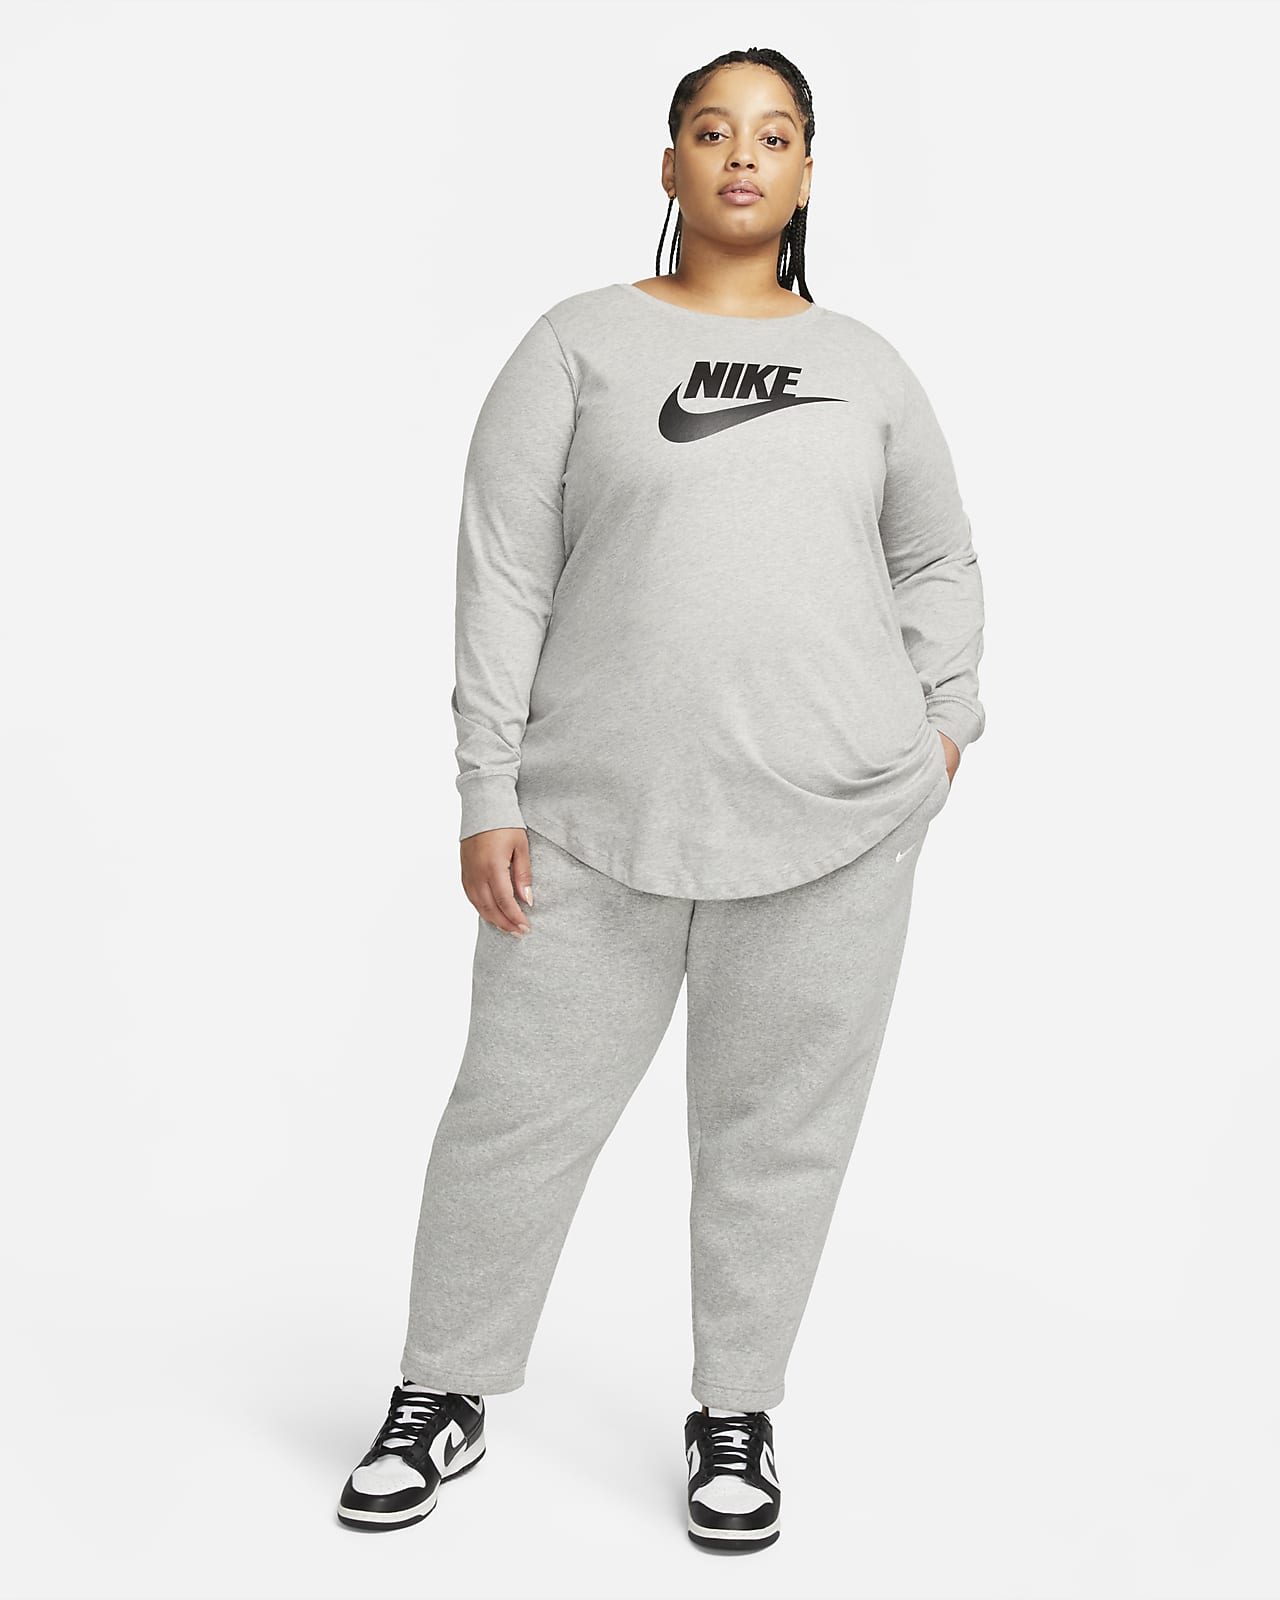 Women's Nike Slim Fit 100% Cotton Long Sleeve Shirt Size XL Light